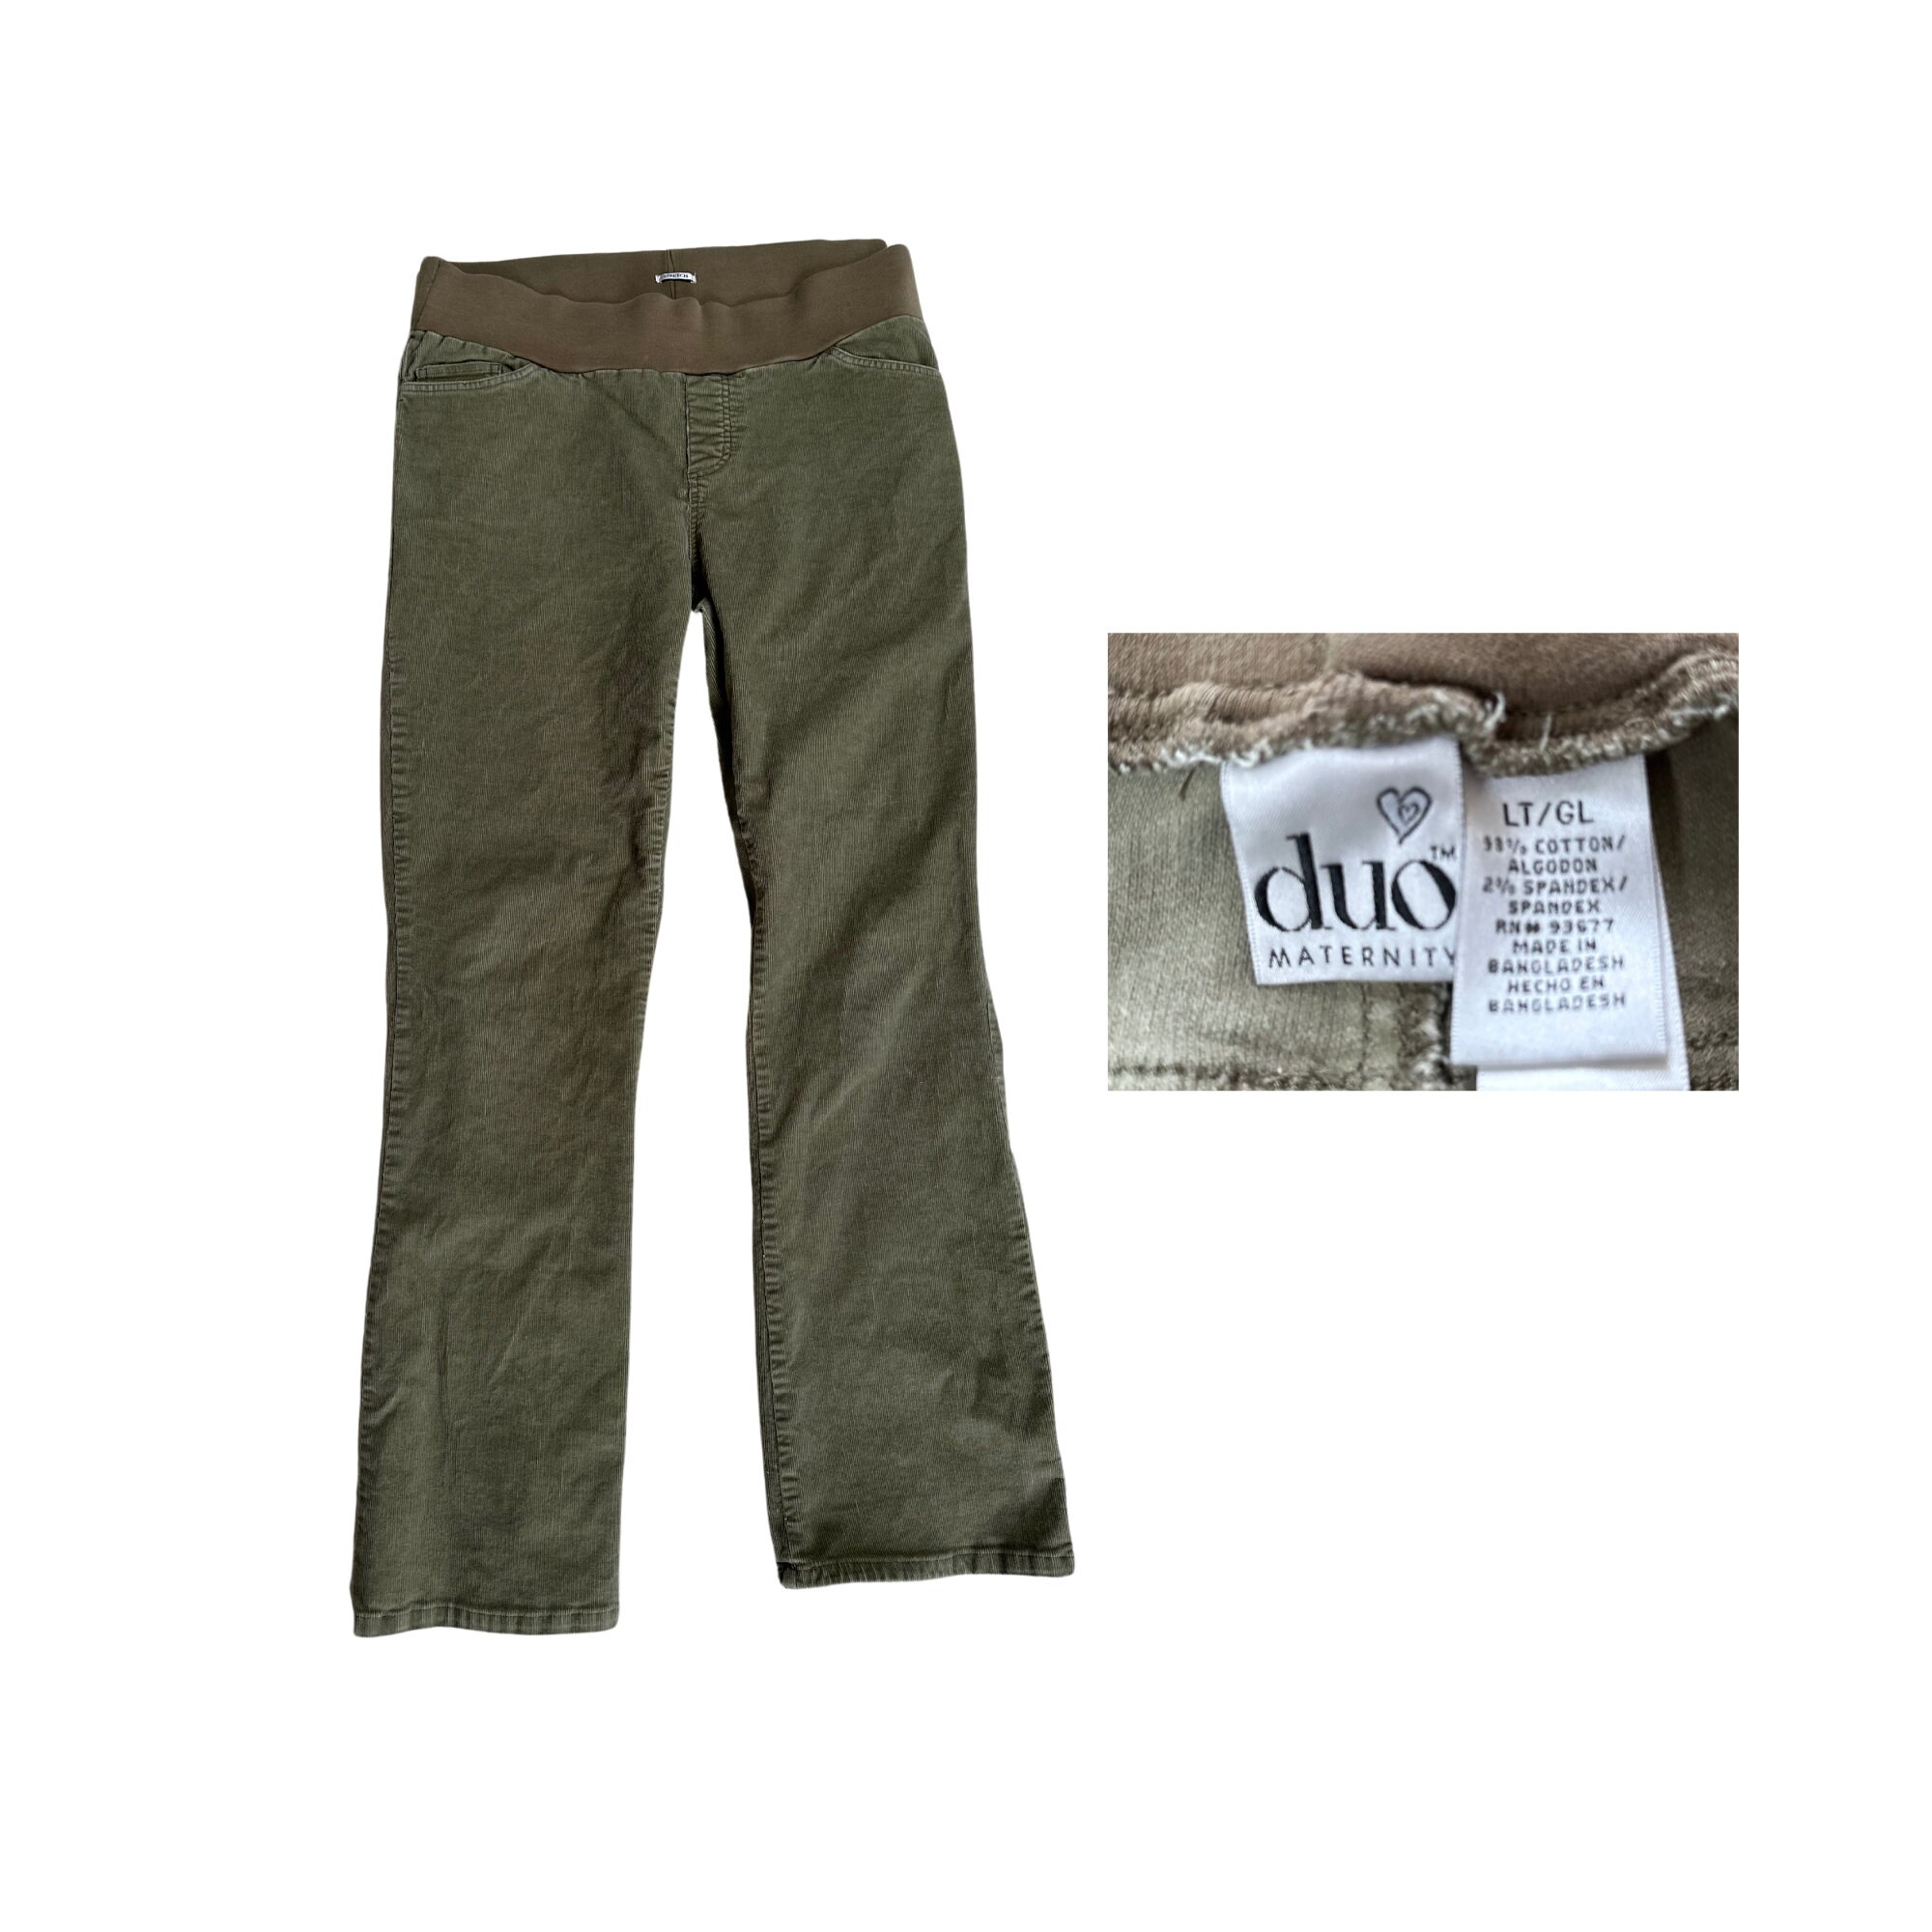 Y2K Cargo Side Pocket Pants, Low Waist Straight Denim Trousers